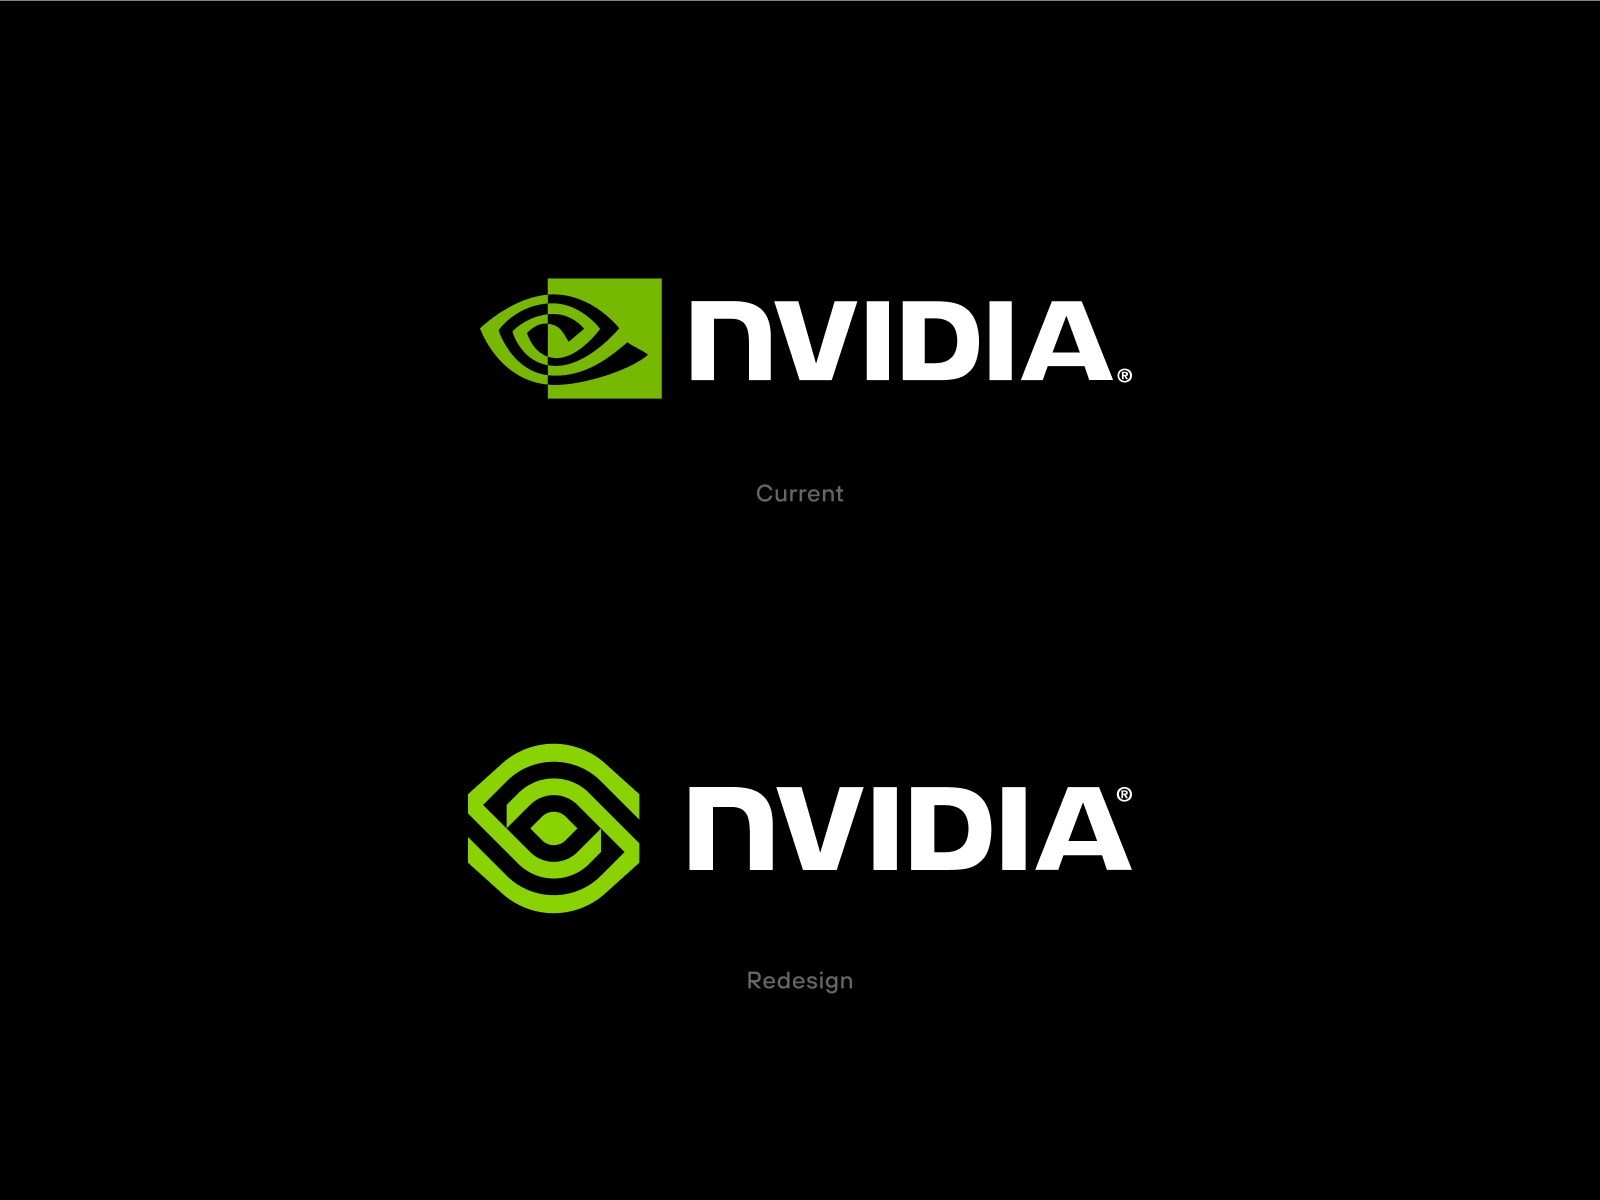 Nvidia Logo Redesign by Dennis Pasyuk on Dribbble